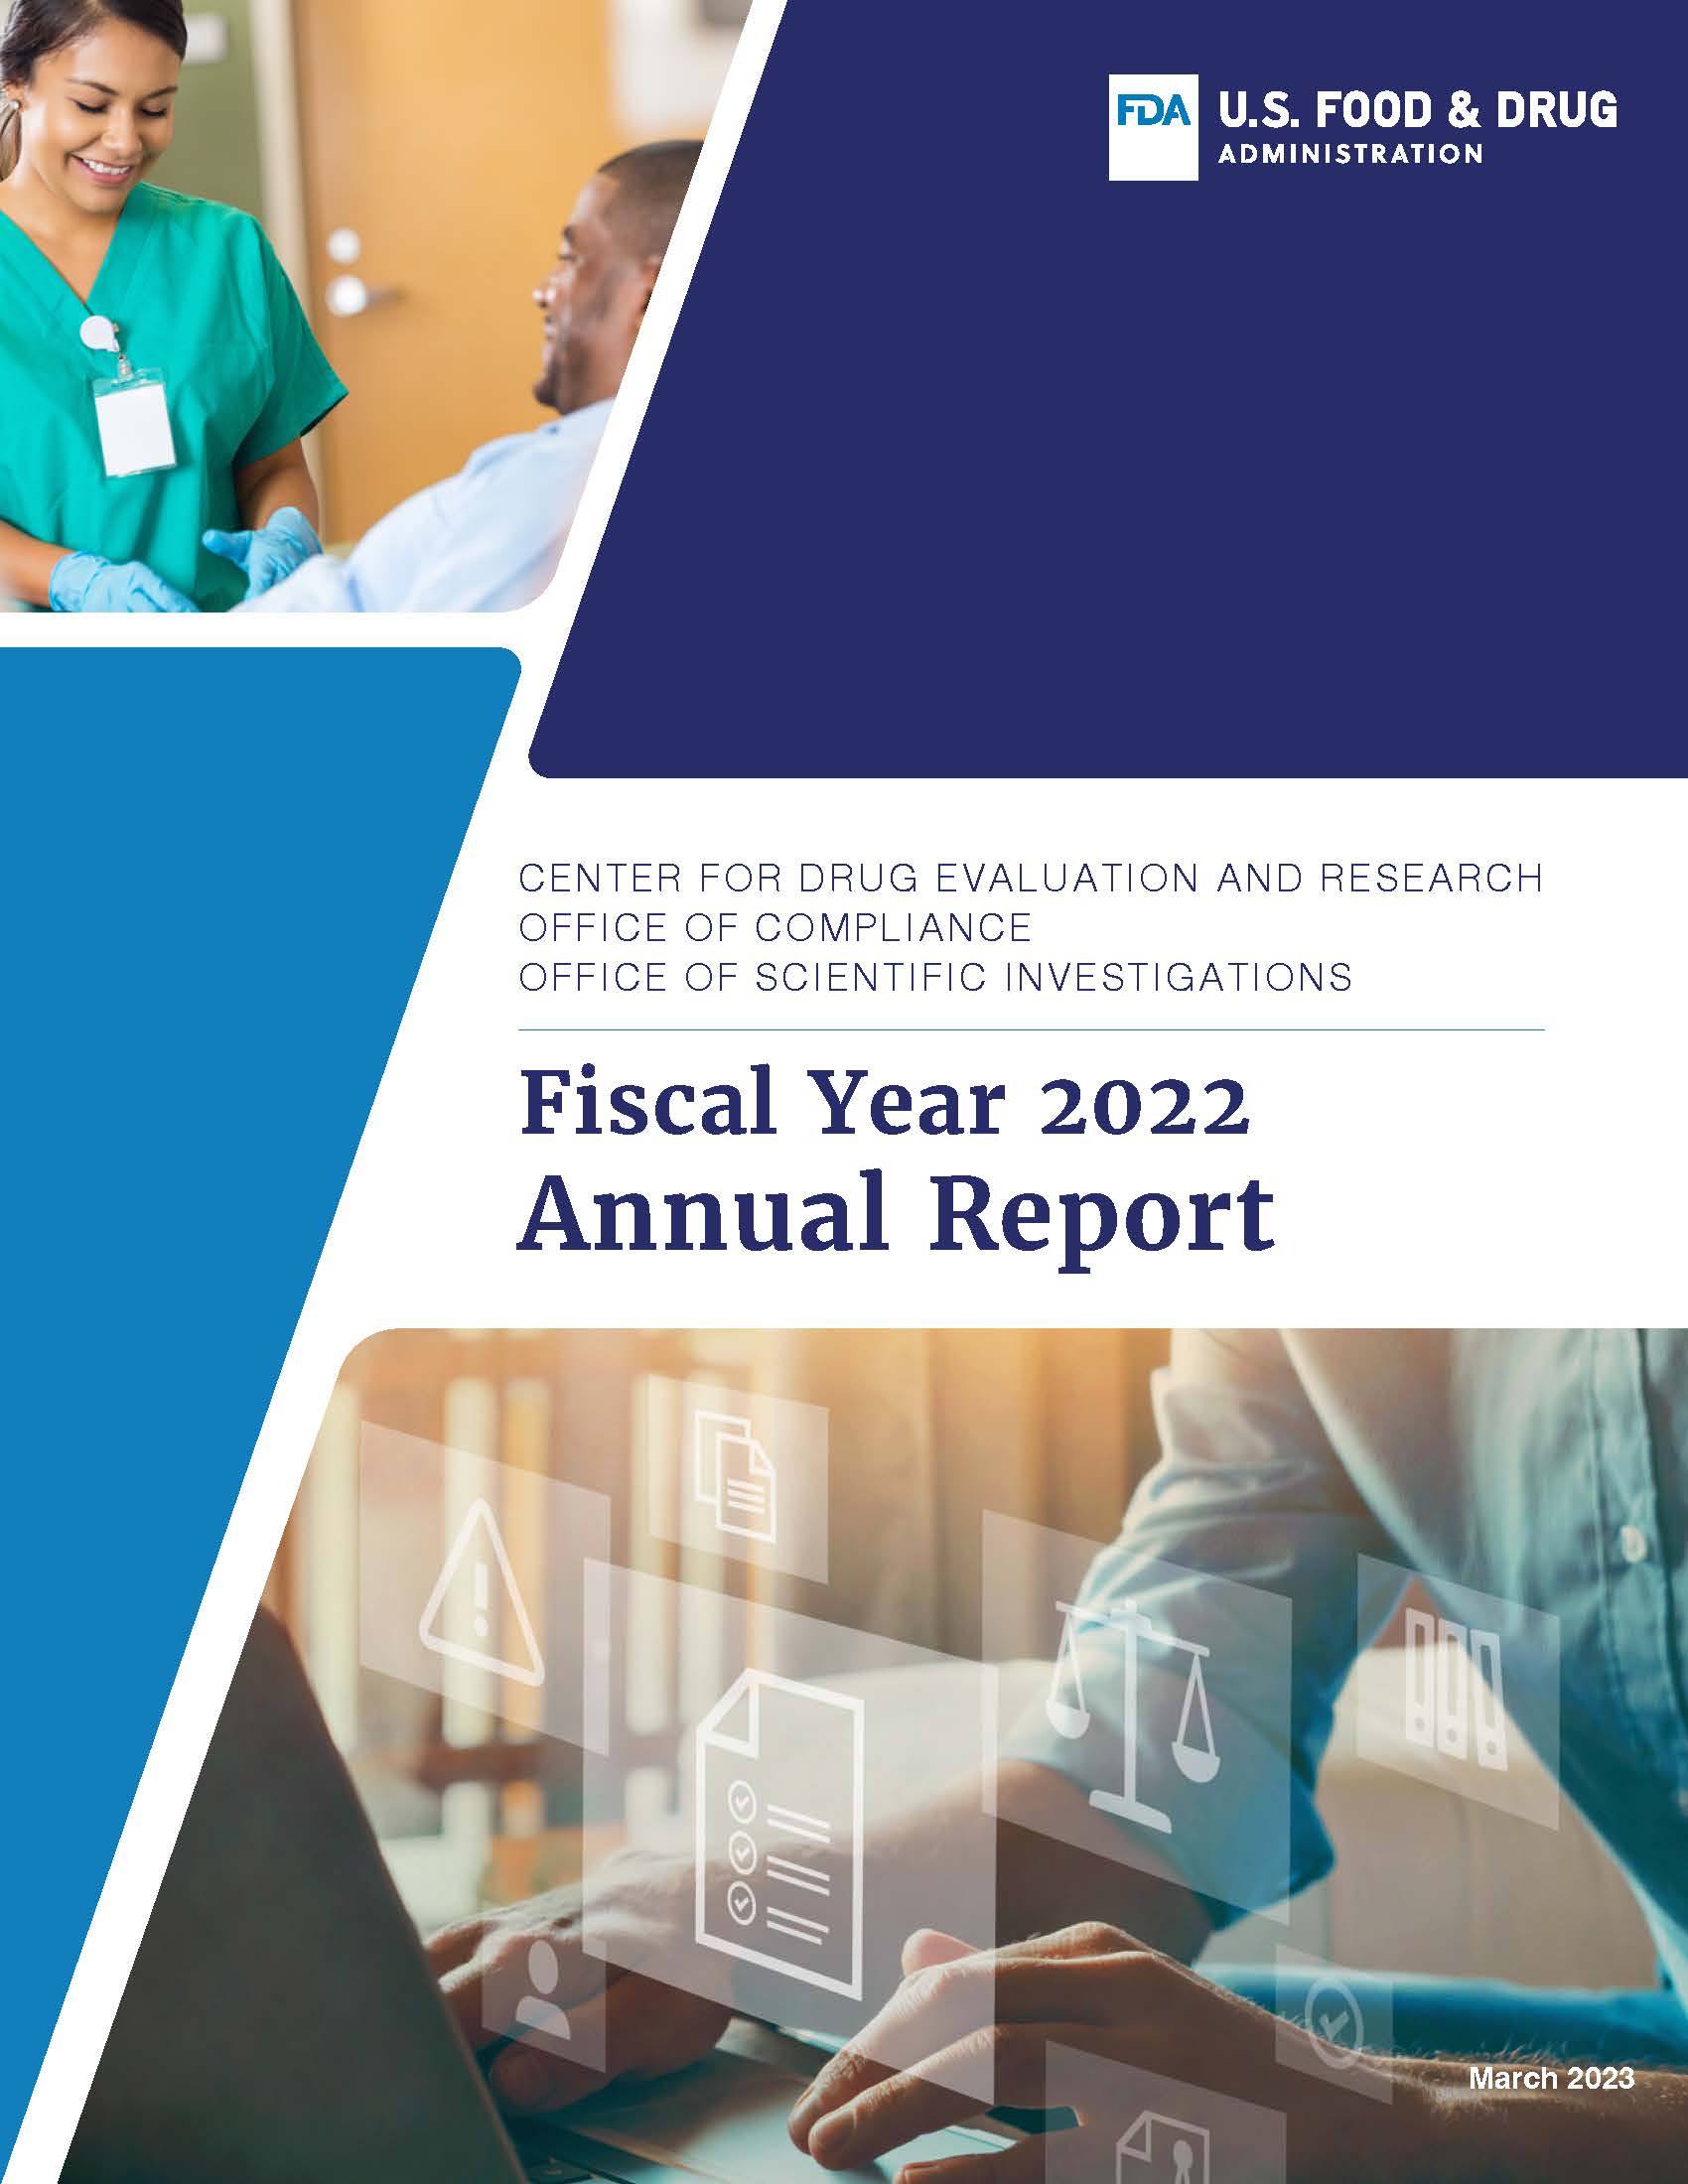 OSI Annual Report FY 2022